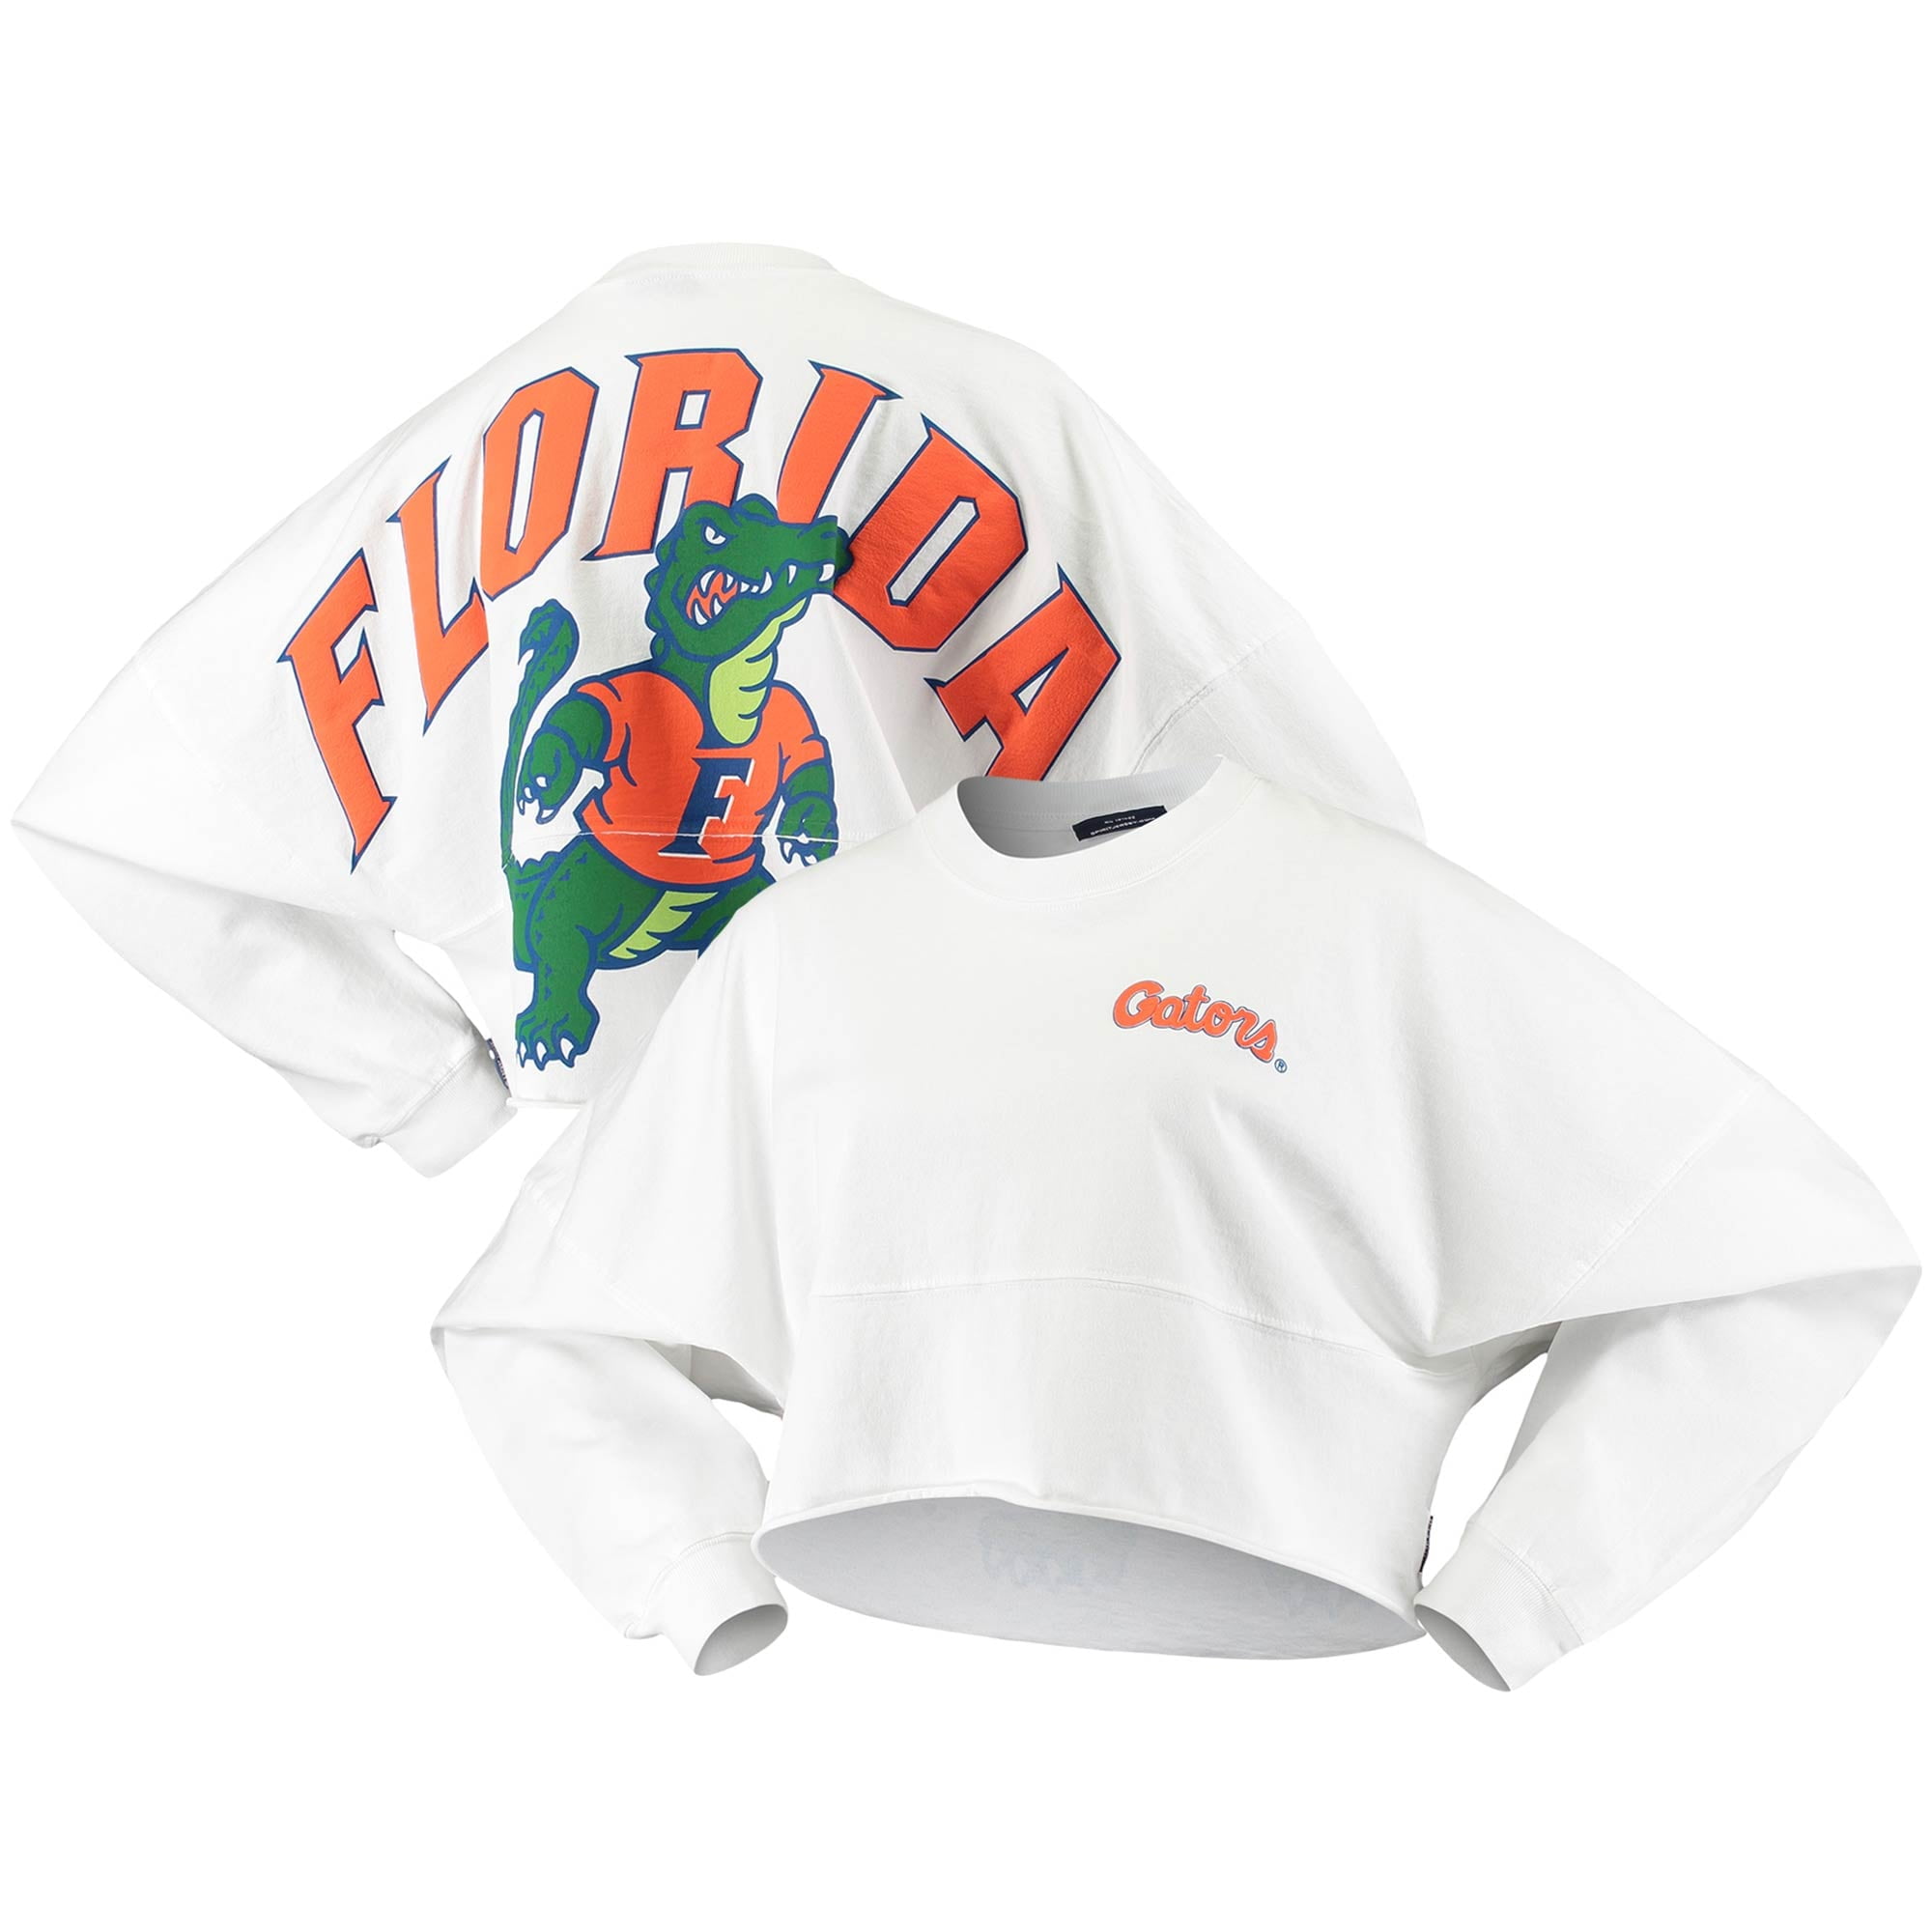 university of florida spirit jersey